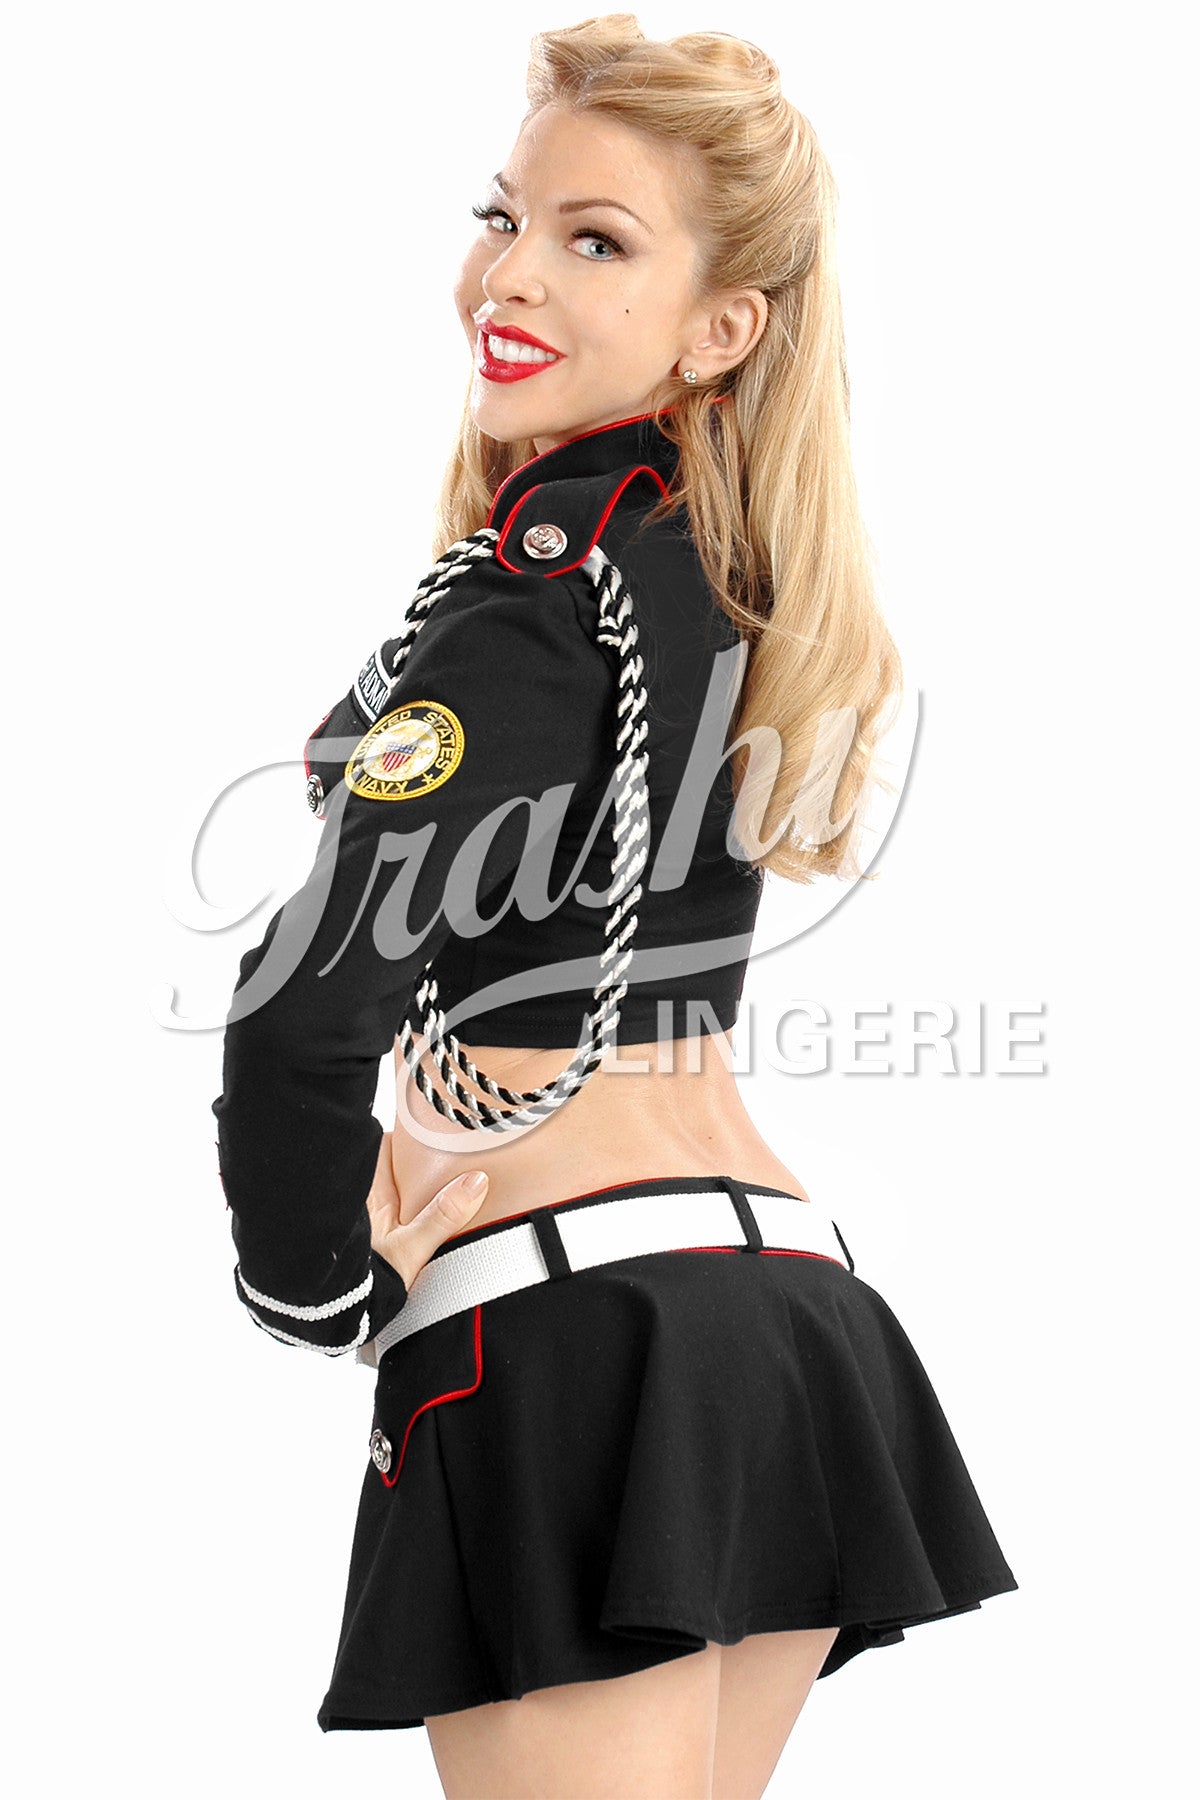 Rear Admiral Skirt